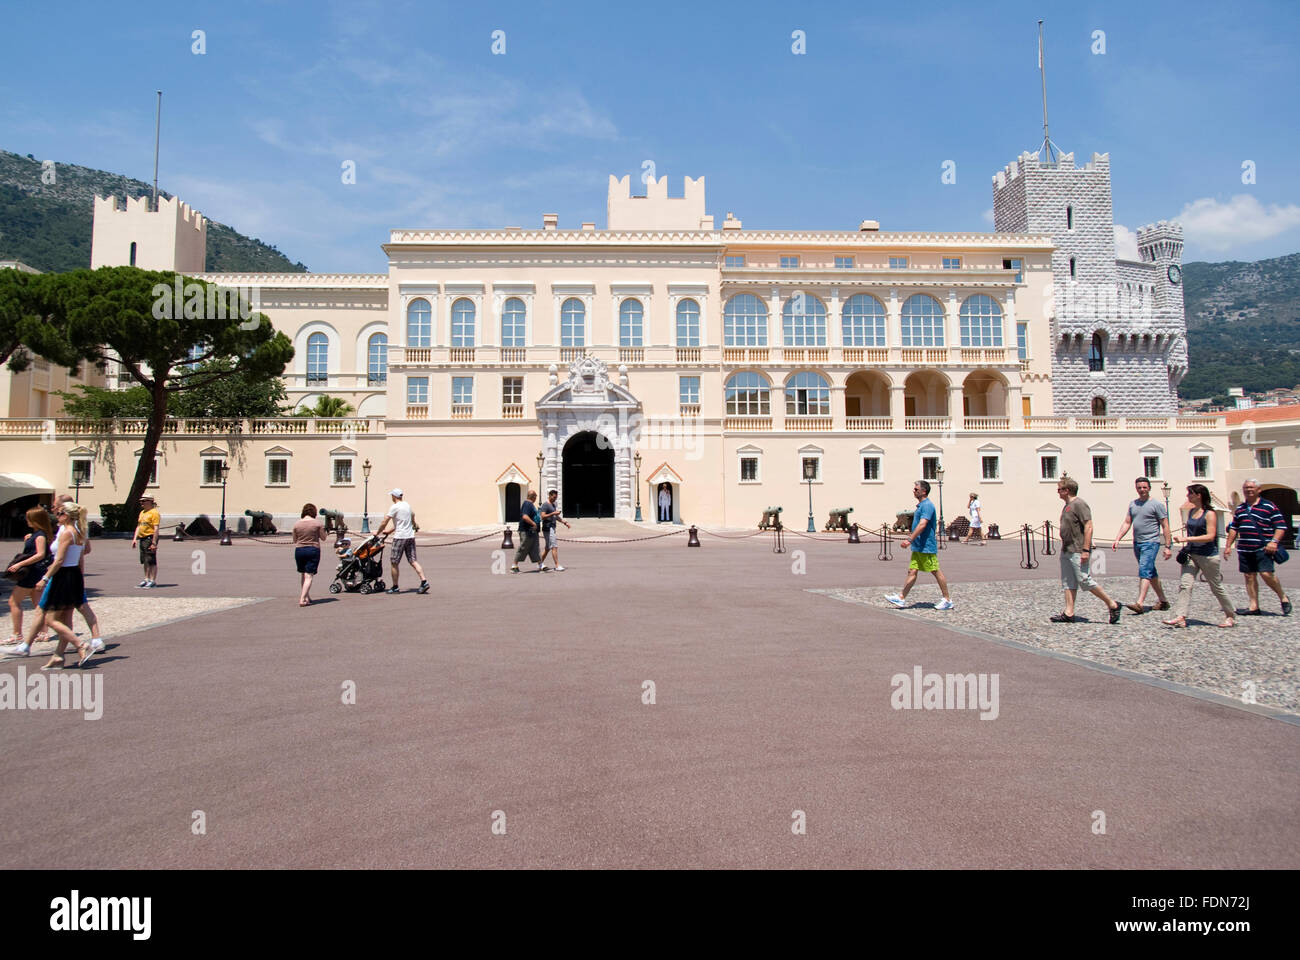 Palais Princier de Monaco Banque D'Images